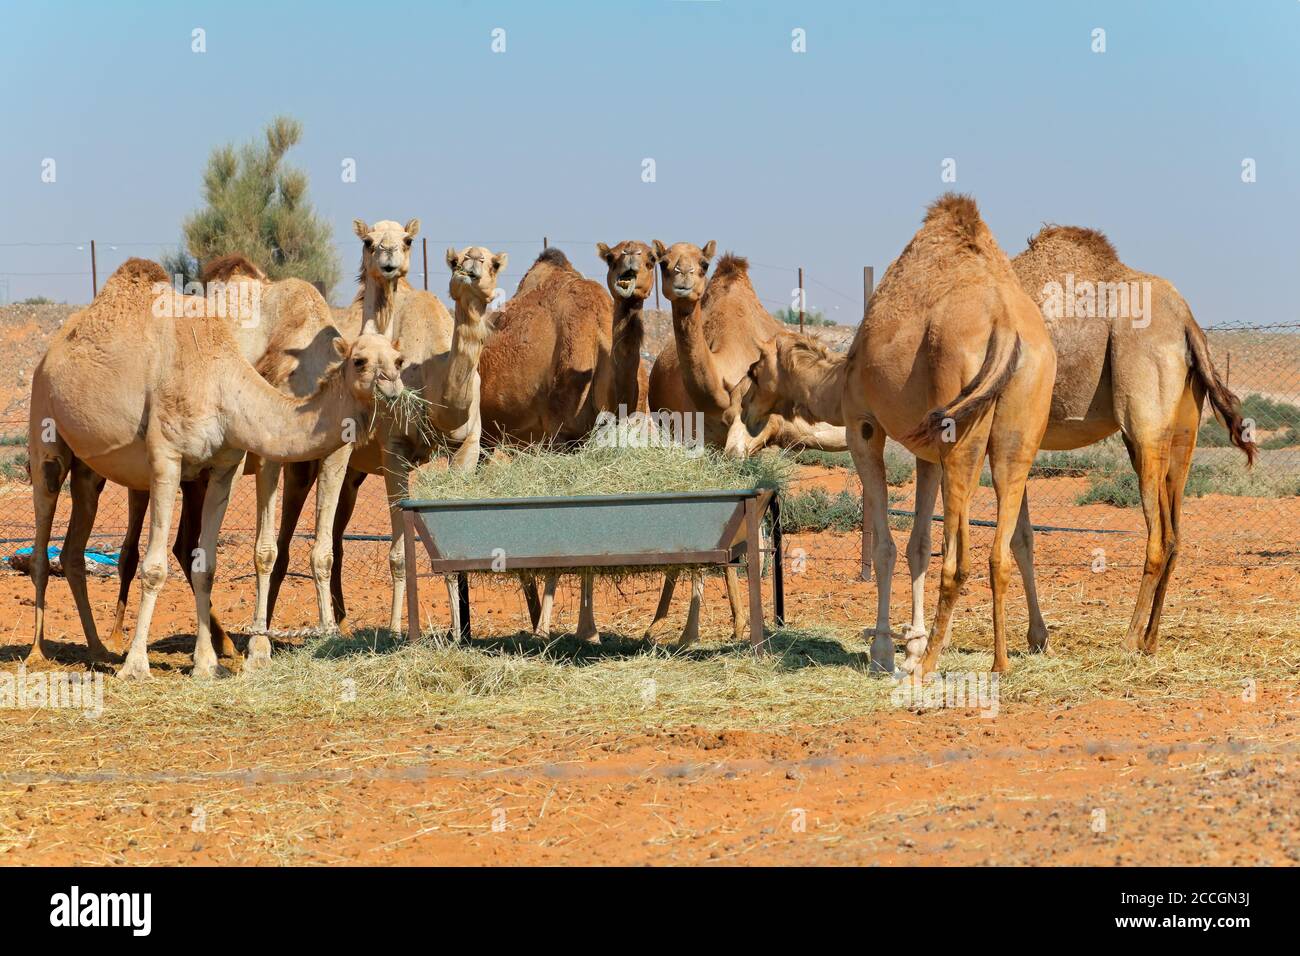 Gruppo di cammelli ad una mangiatoia in un rurale Area degli Emirati Arabi Uniti Foto Stock